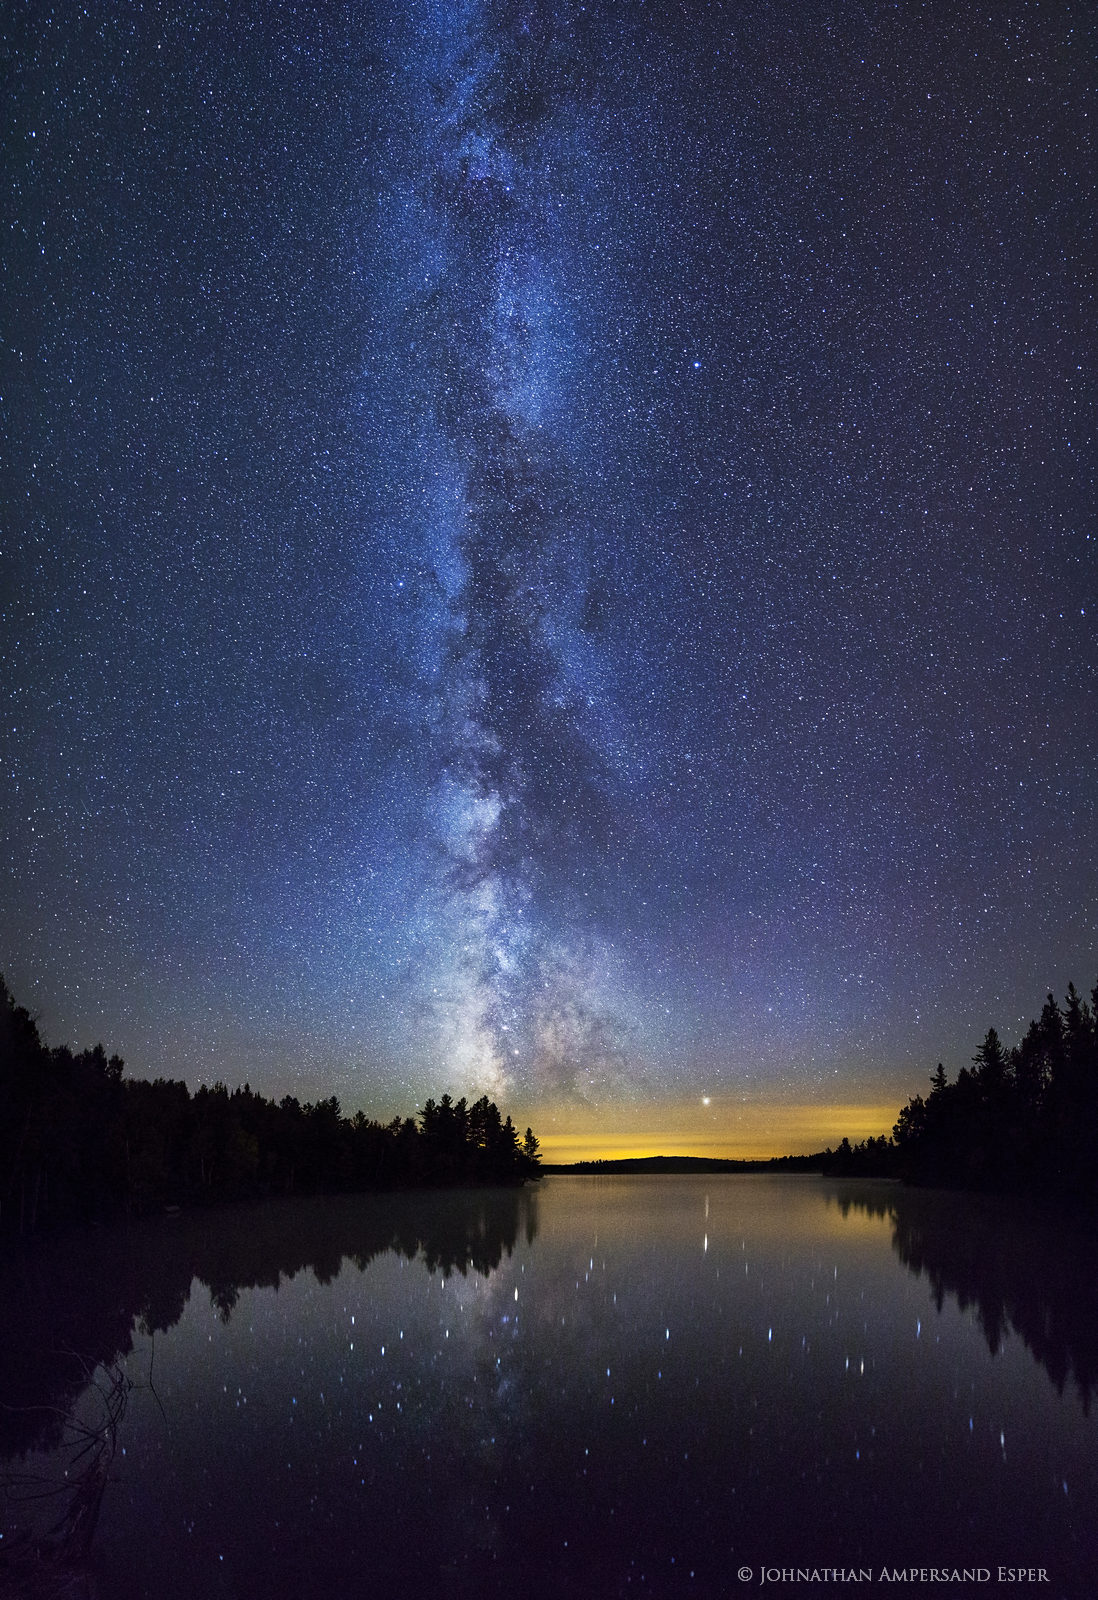 Kushaqua Lake,Lake Kushaqua,Milky Way,stars,night,sky,galaxy,reflection,Milky Way galaxy,